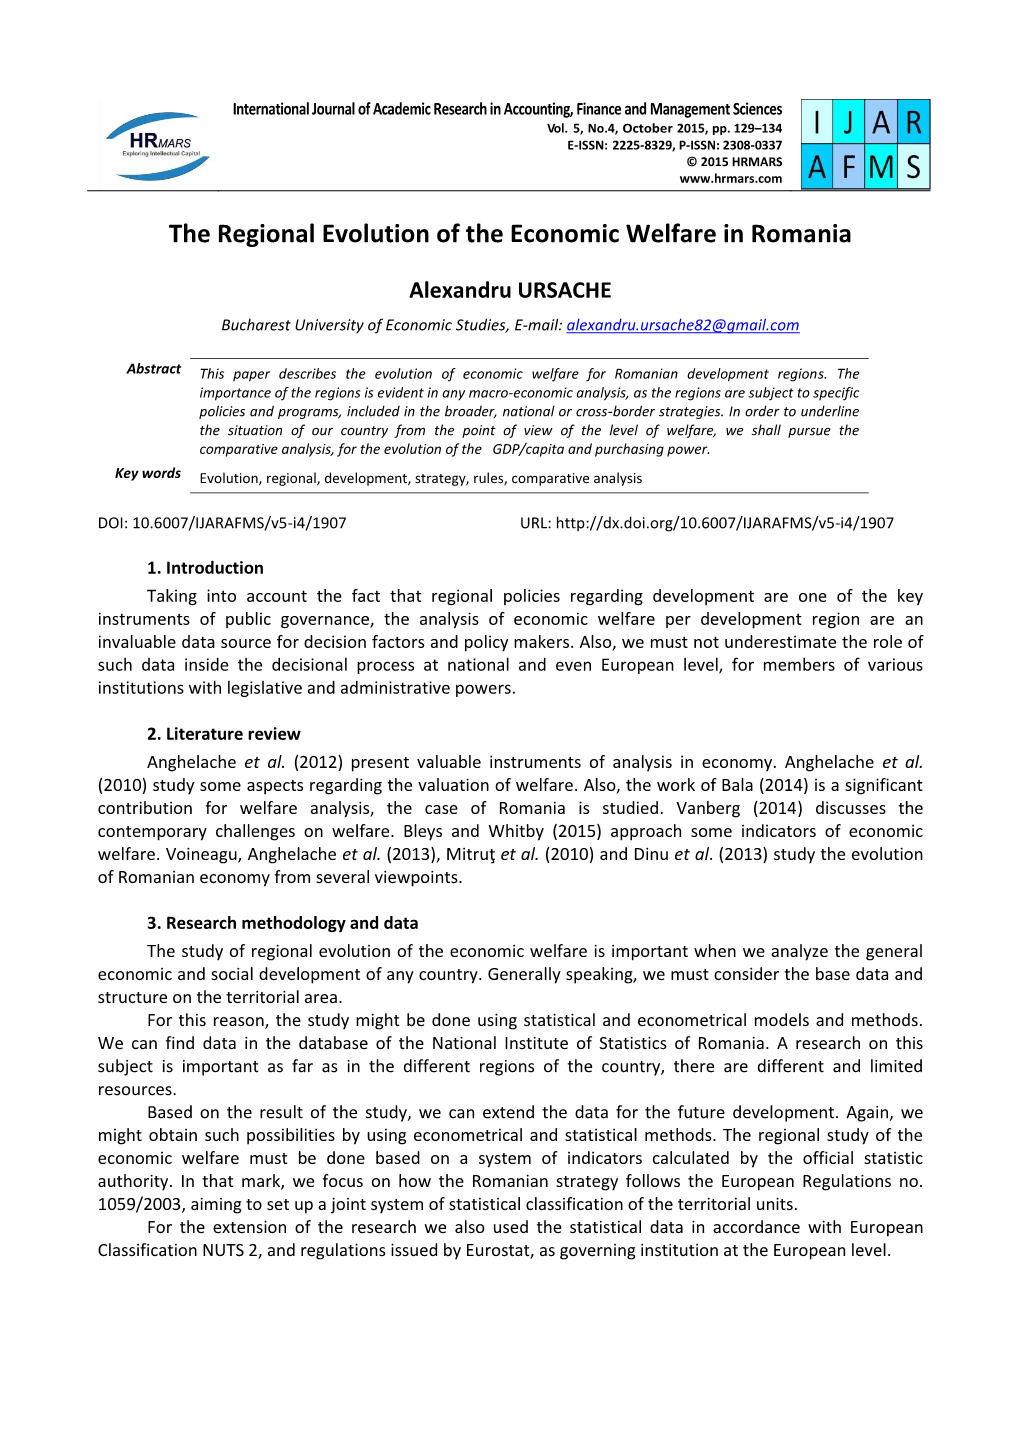 The Regional Evolution of the Economic Welfare in Romania